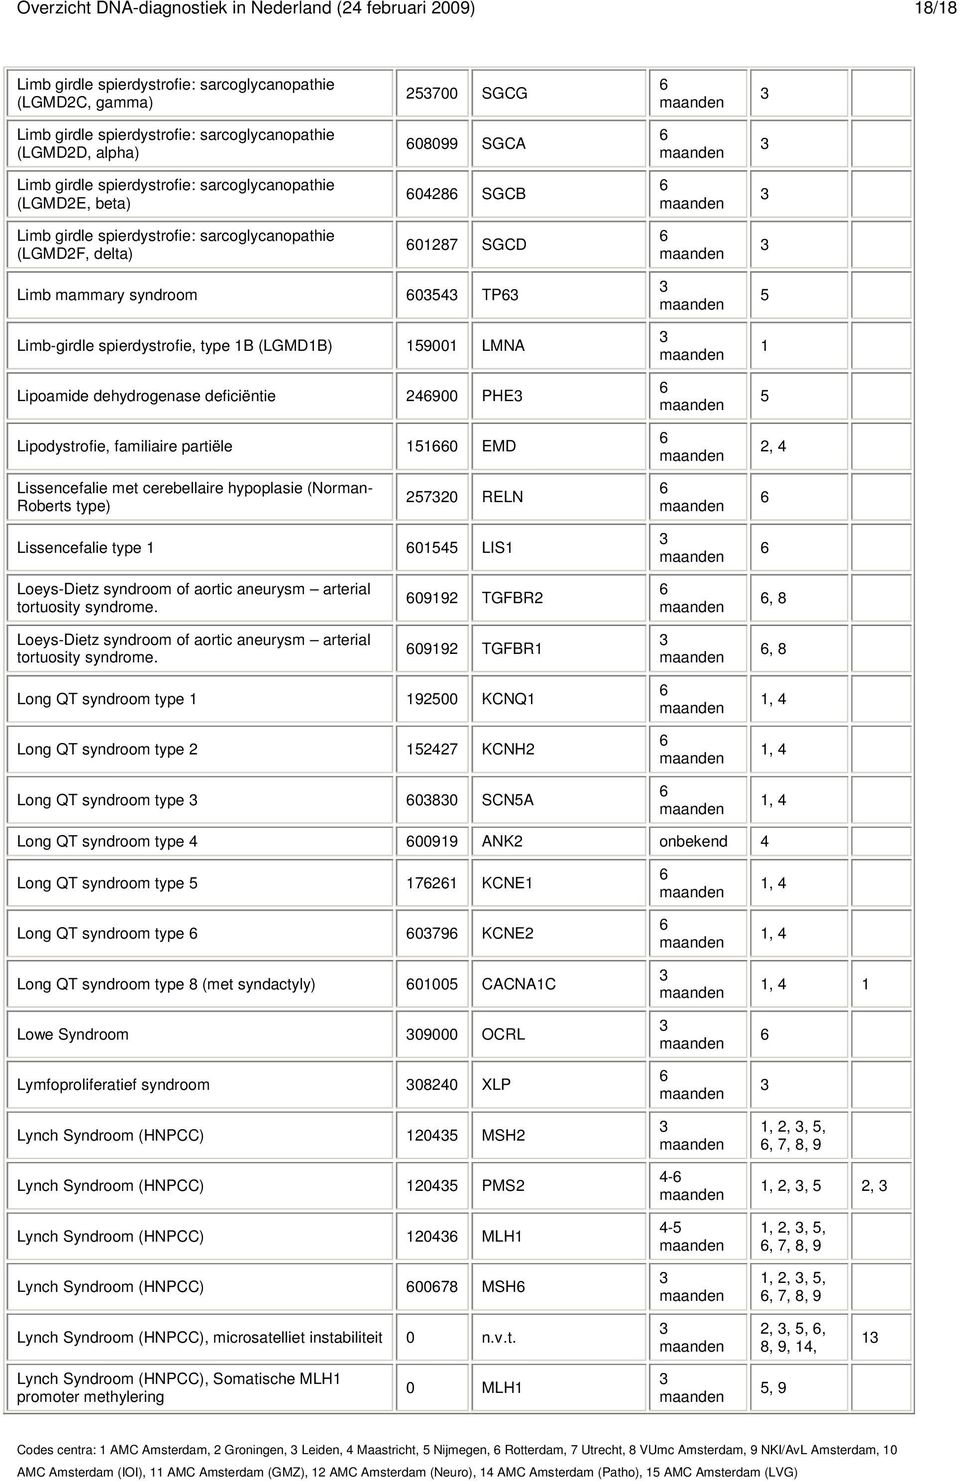 (LGMDB) 900 LMNA Lipoamide dehydrogenase deficiëntie 900 PHE Lipodystrofie, familiaire partiële 0 EMD, Lissencefalie met cerebellaire hypoplasie (Norman- Roberts type) 0 RELN Lissencefalie type 0 LIS